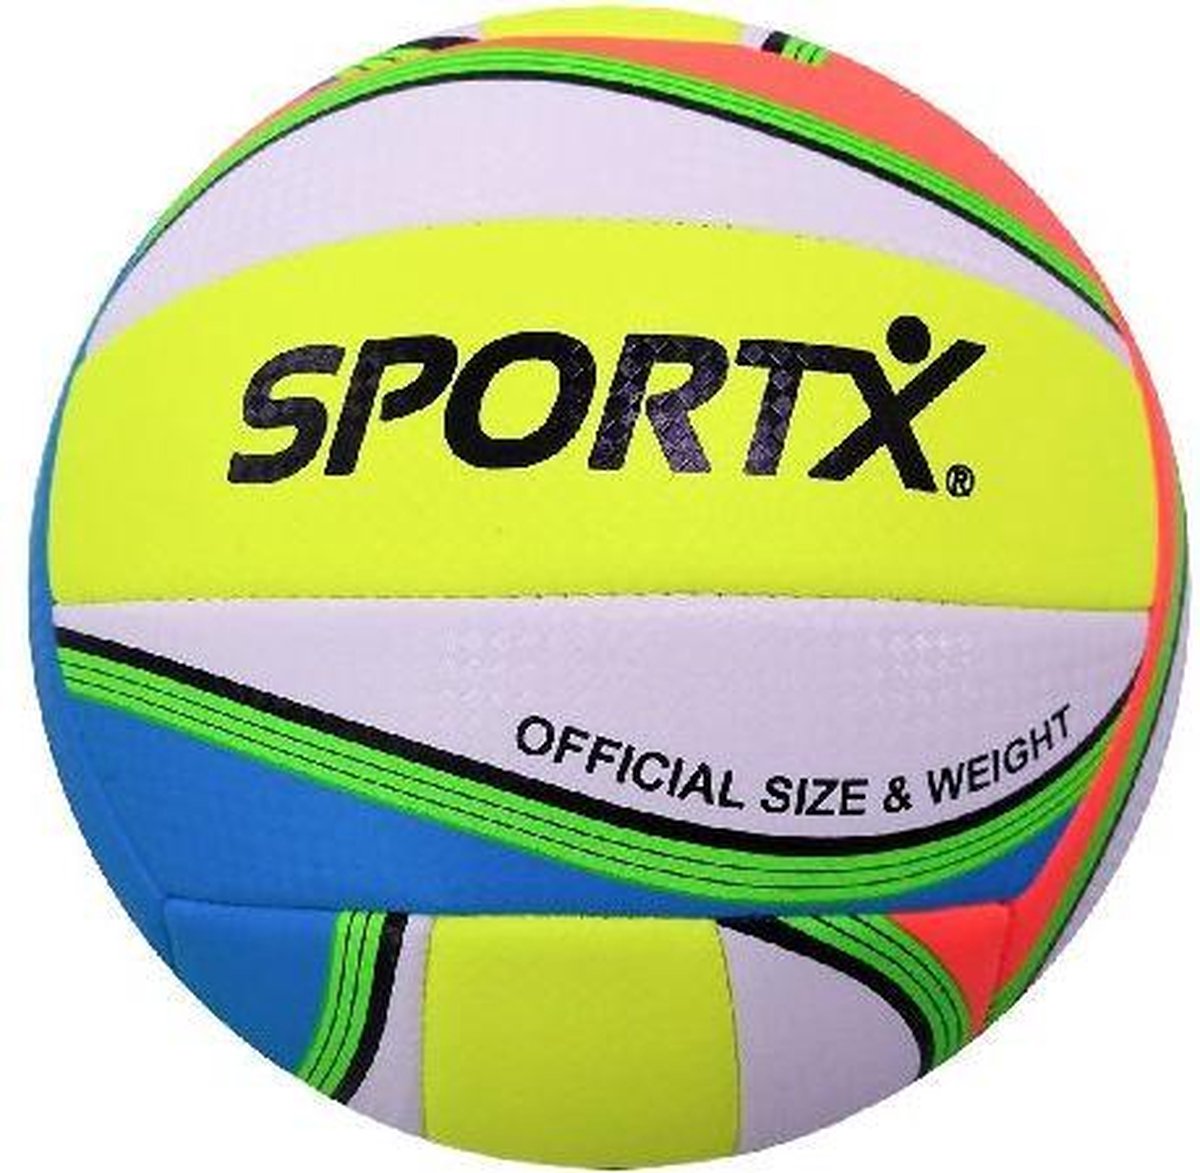 SportX Volleybal Summer Waves 260-280gr - SportX